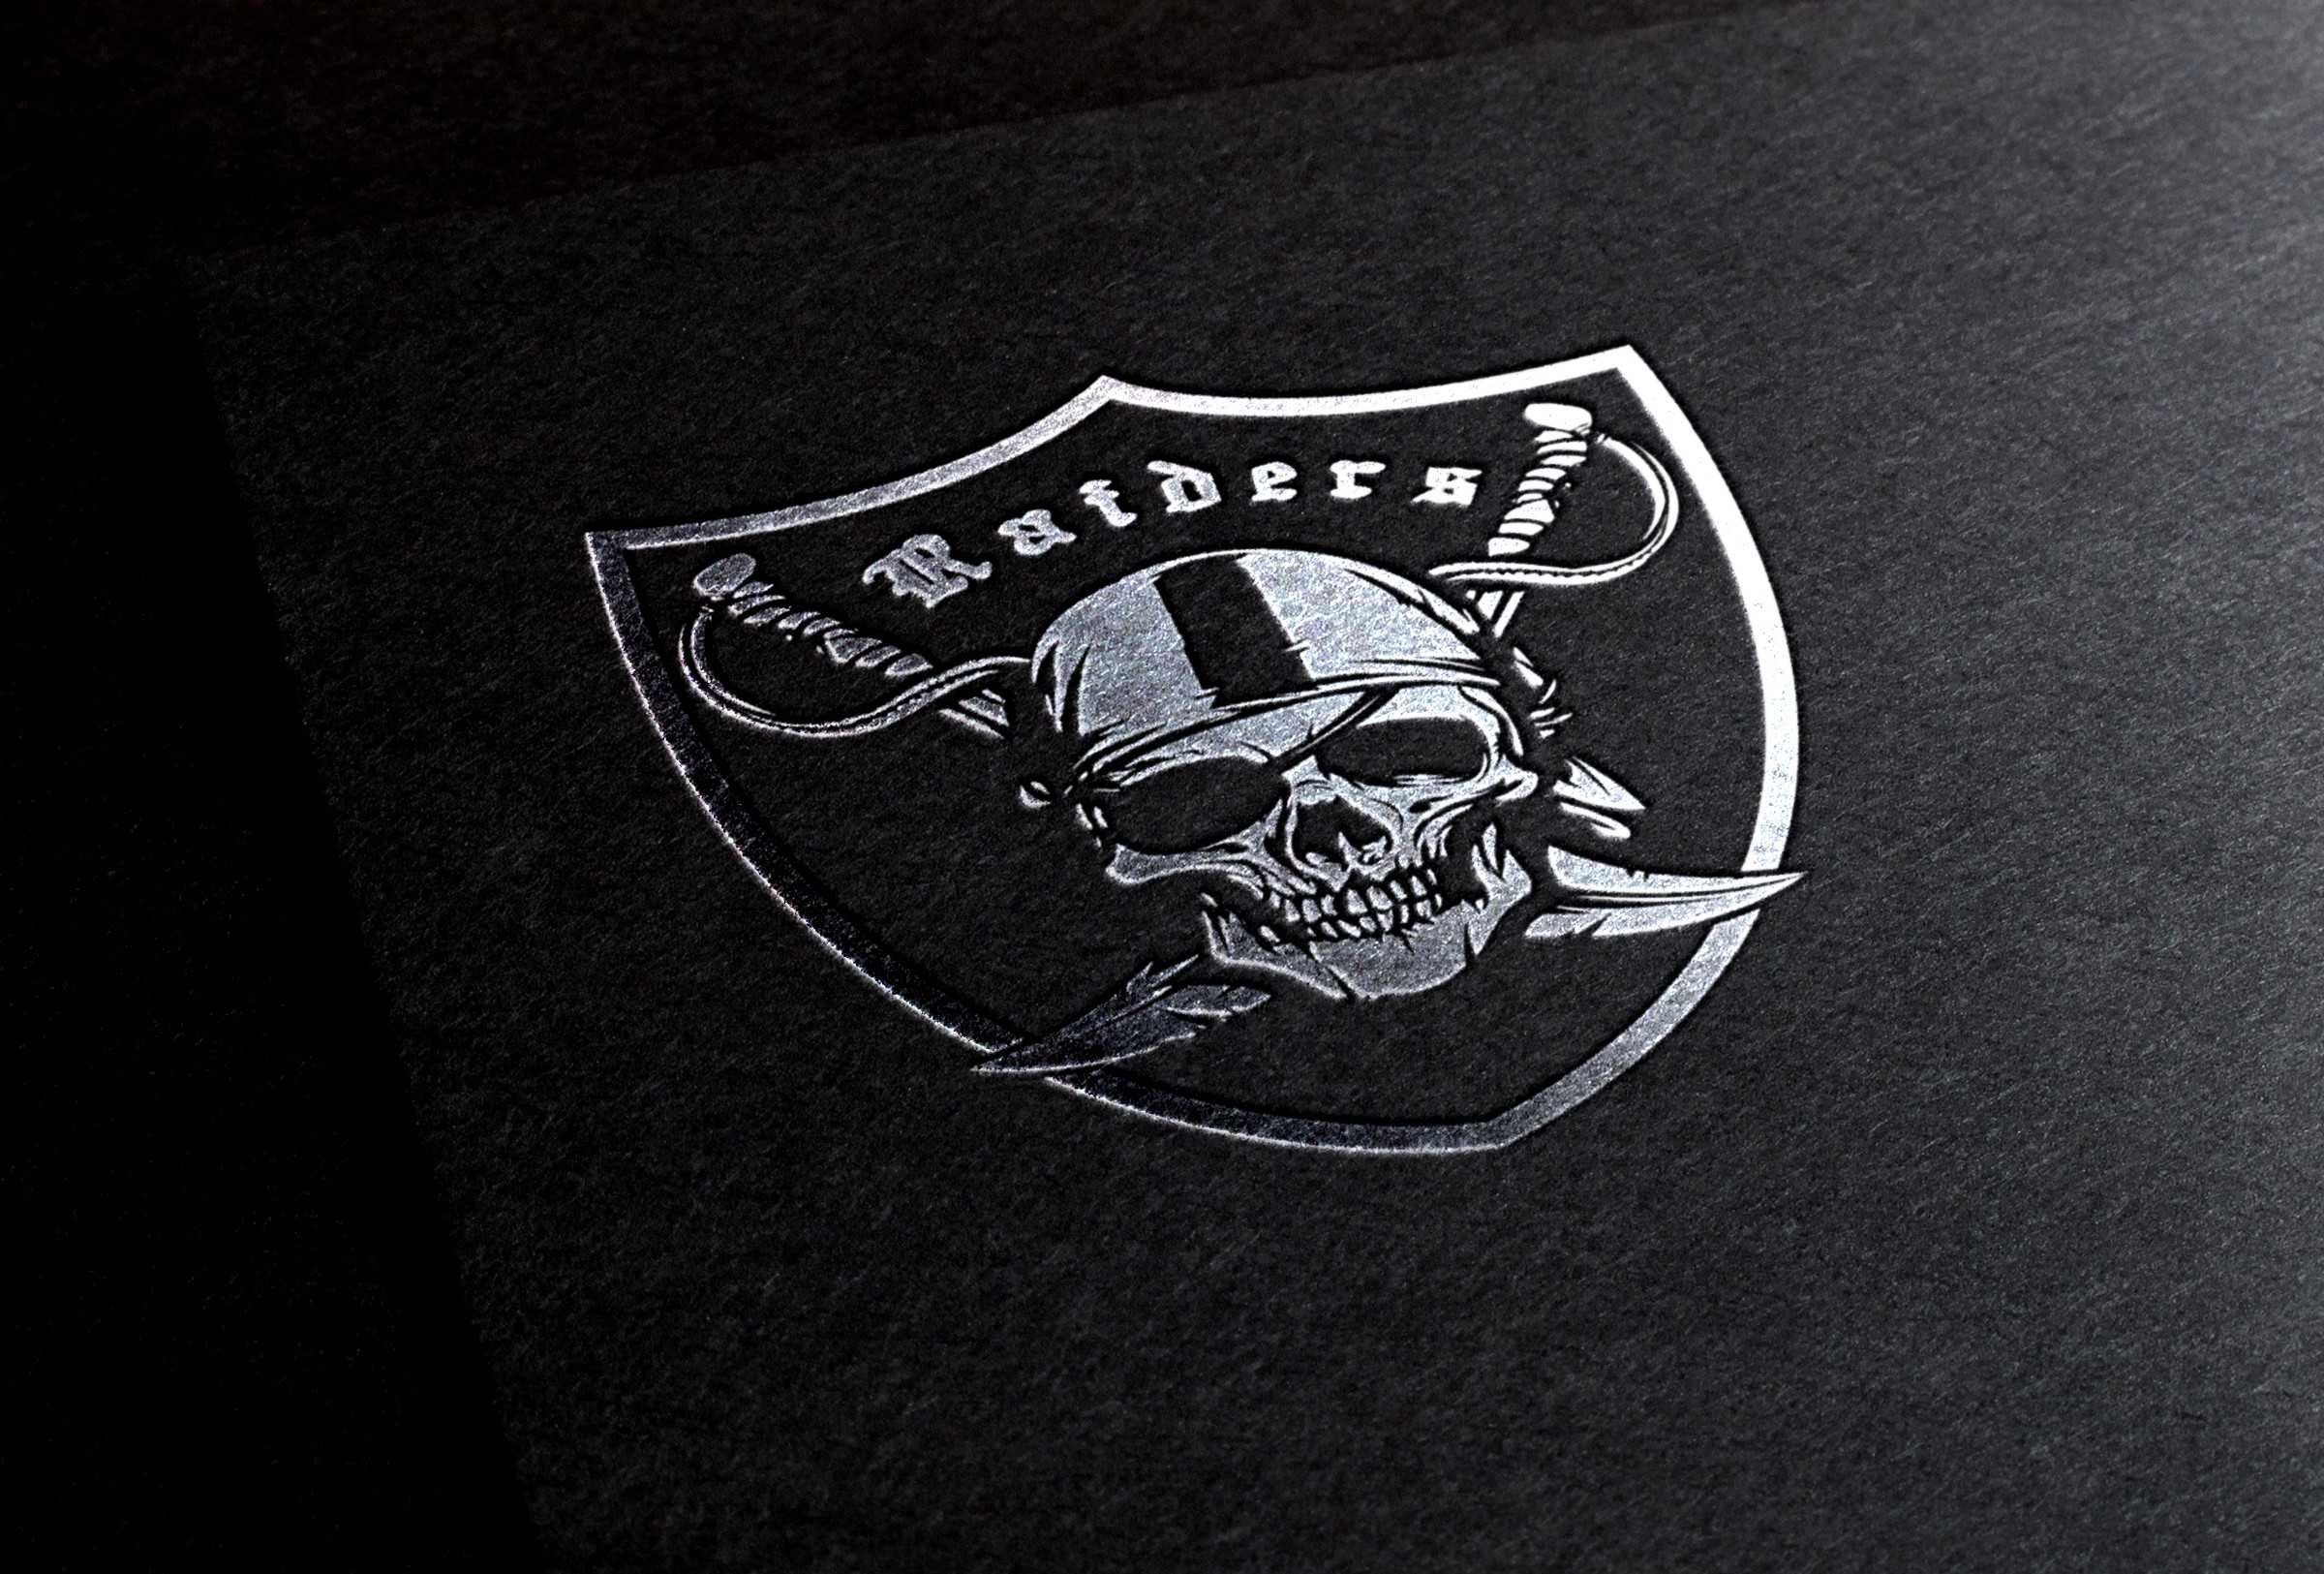 Raiders Logo Wallpaper HD